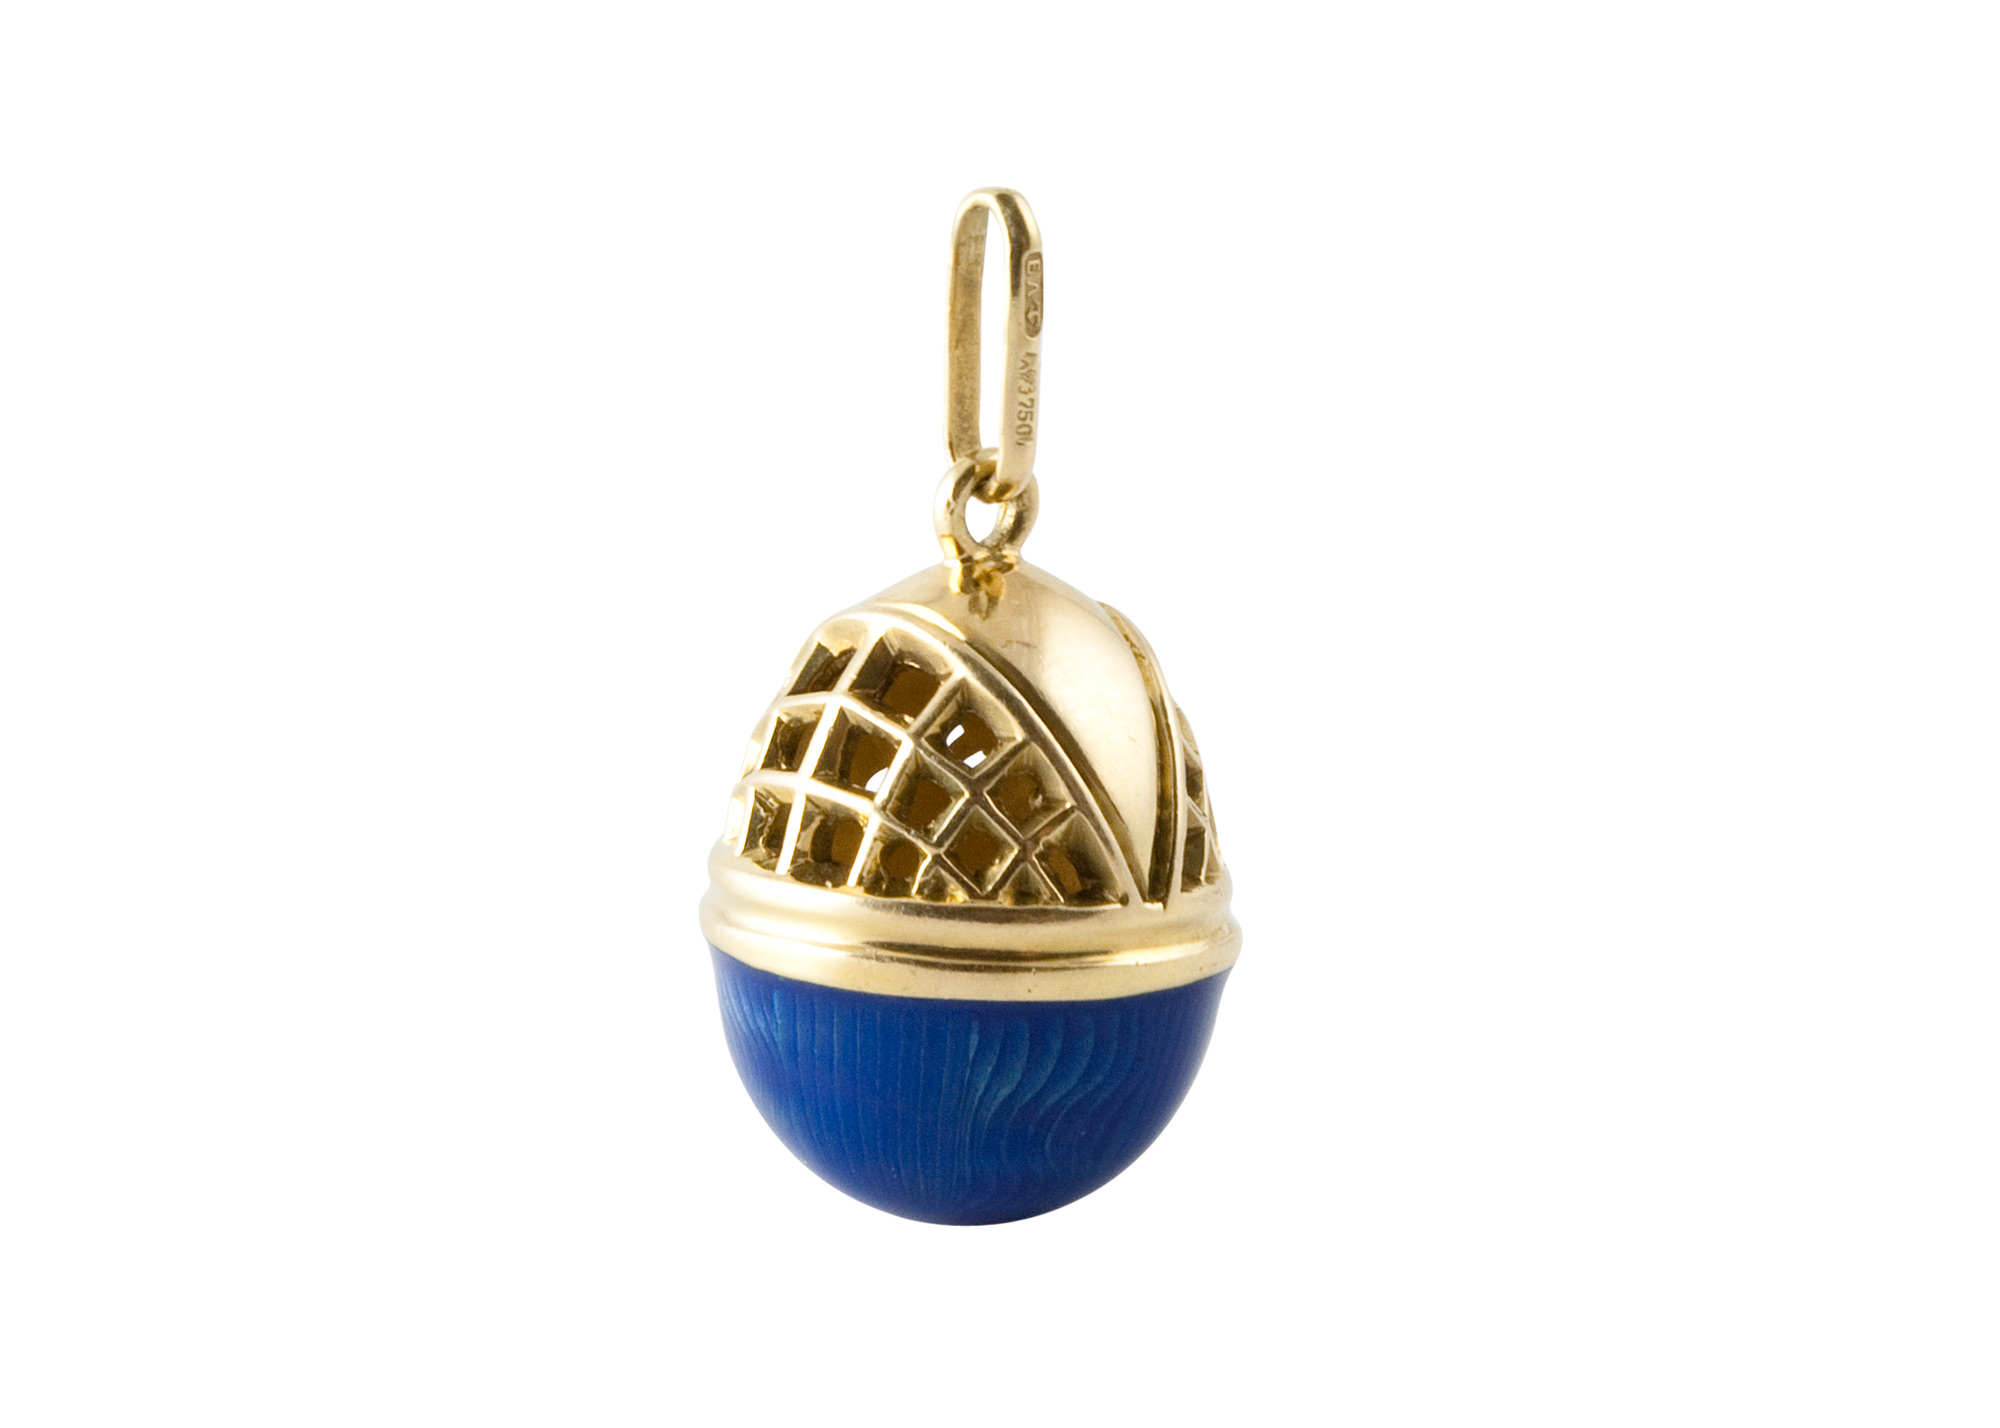 Buy Acorn Faberge Style Pendant at GoldenCockerel.com